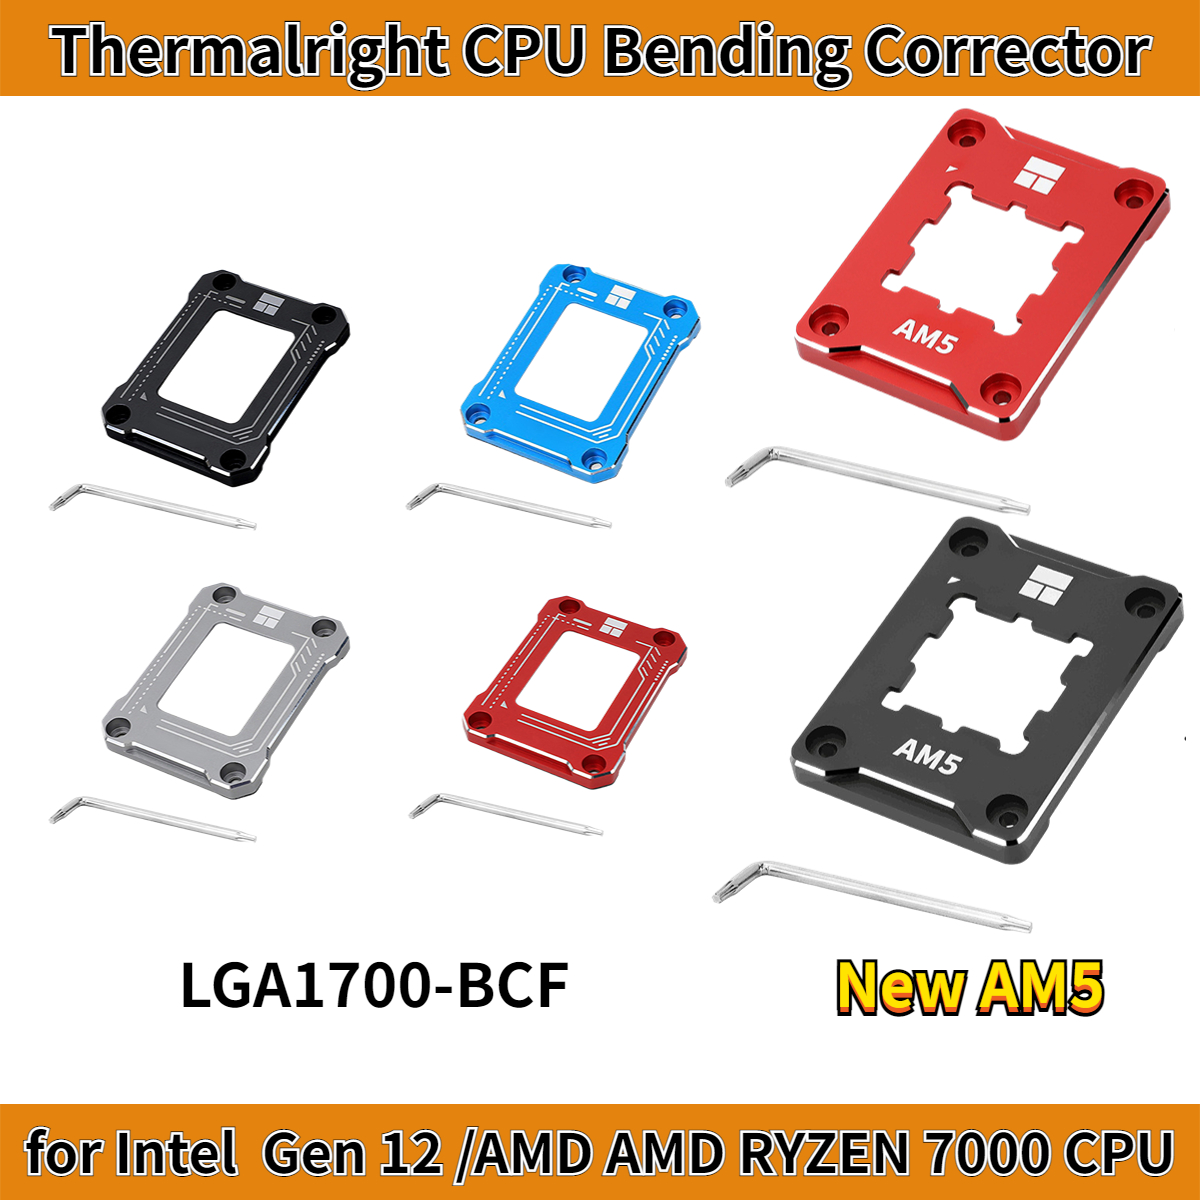 Thermalright-LGA1700-BCF-AMD-ASF-CPU-Bending-Correction-Fixed-Buckle-CNC-Aluminium-Alloy-for-Intel-Gen